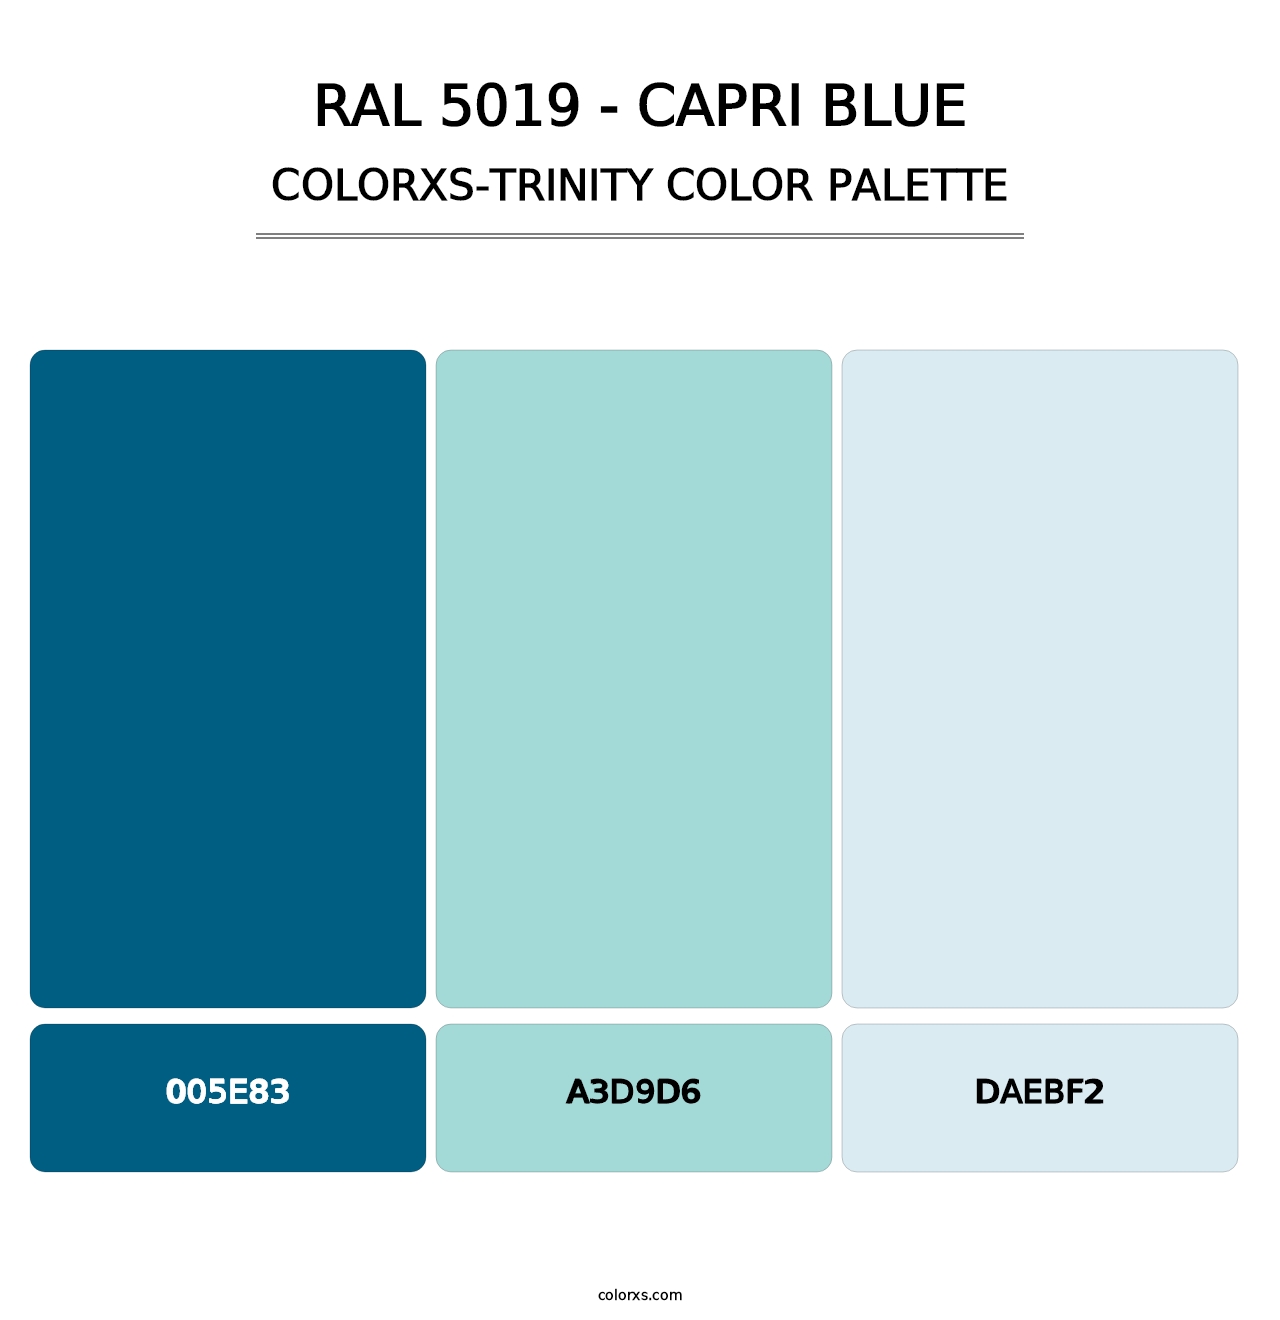 RAL 5019 - Capri Blue - Colorxs Trinity Palette